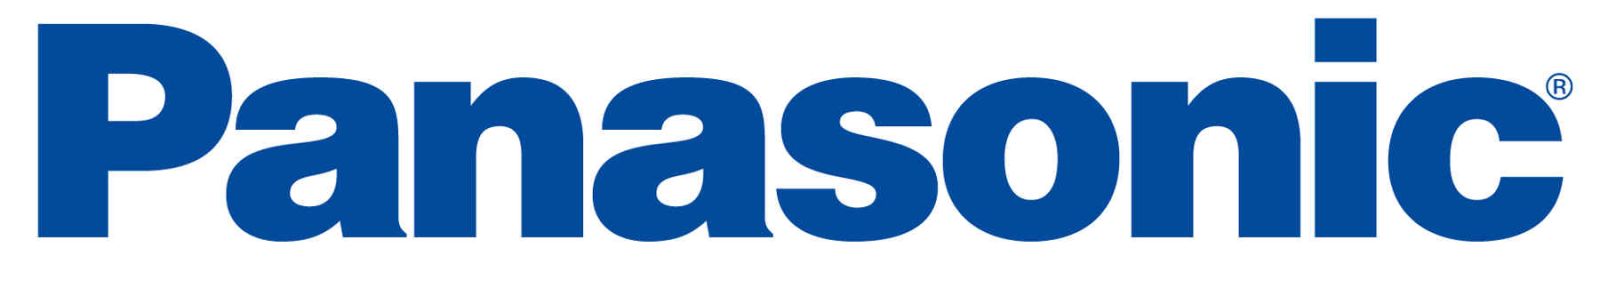 Feneryolu  Panasonic TV logo